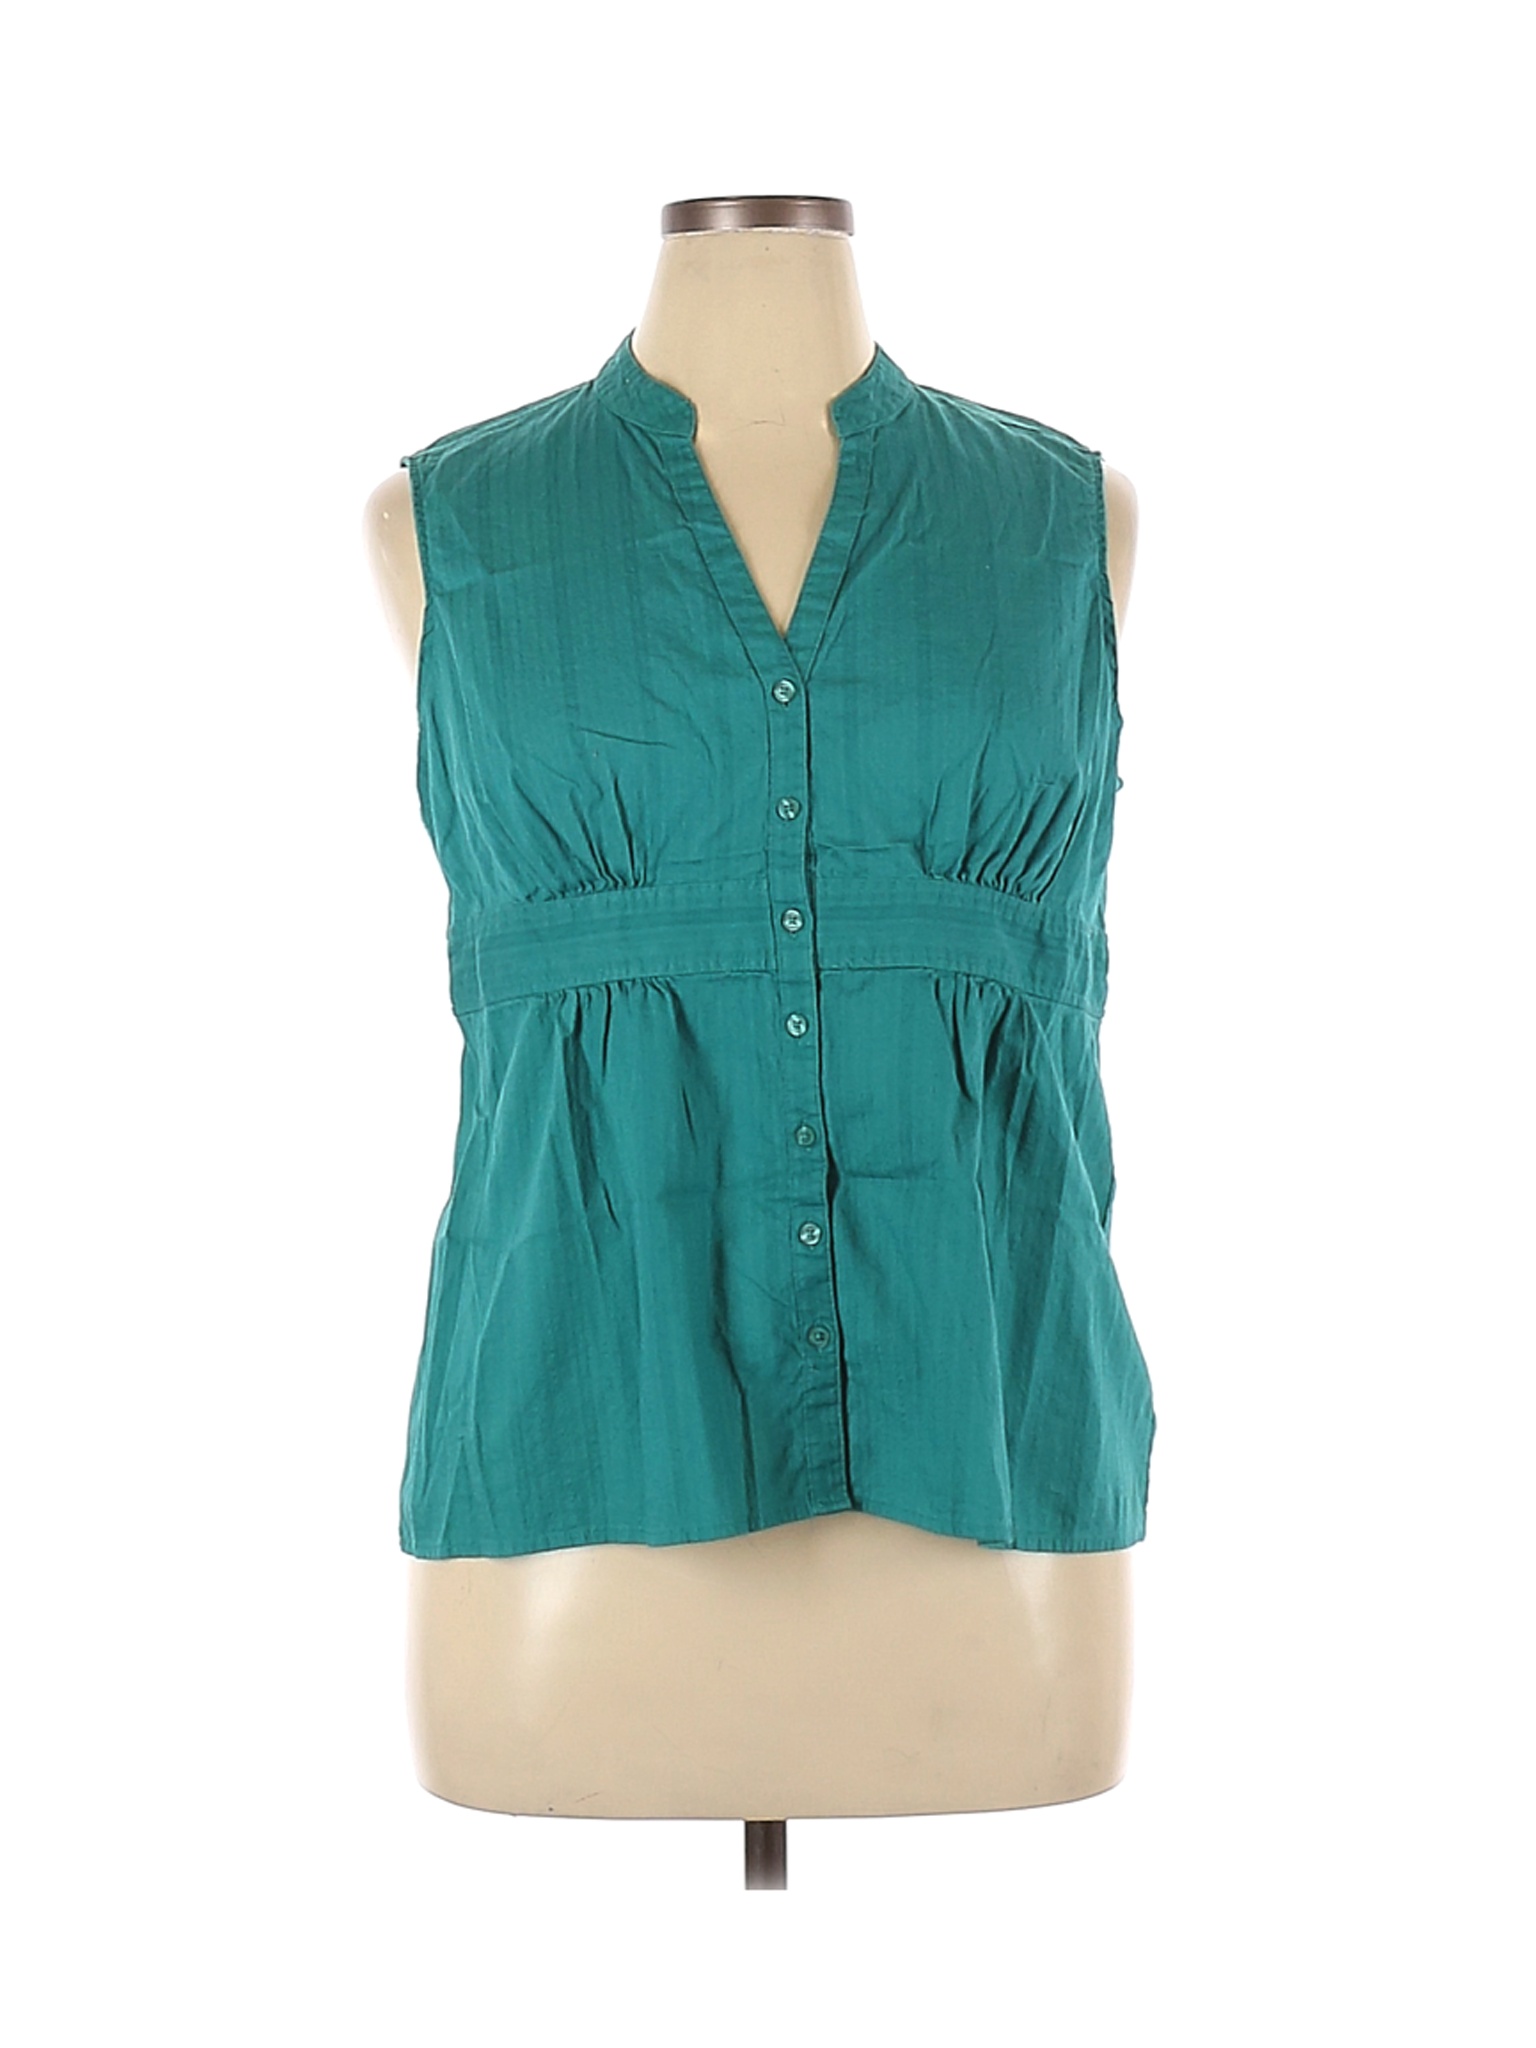 SONOMA life + style Women Green Sleeveless Blouse XL | eBay